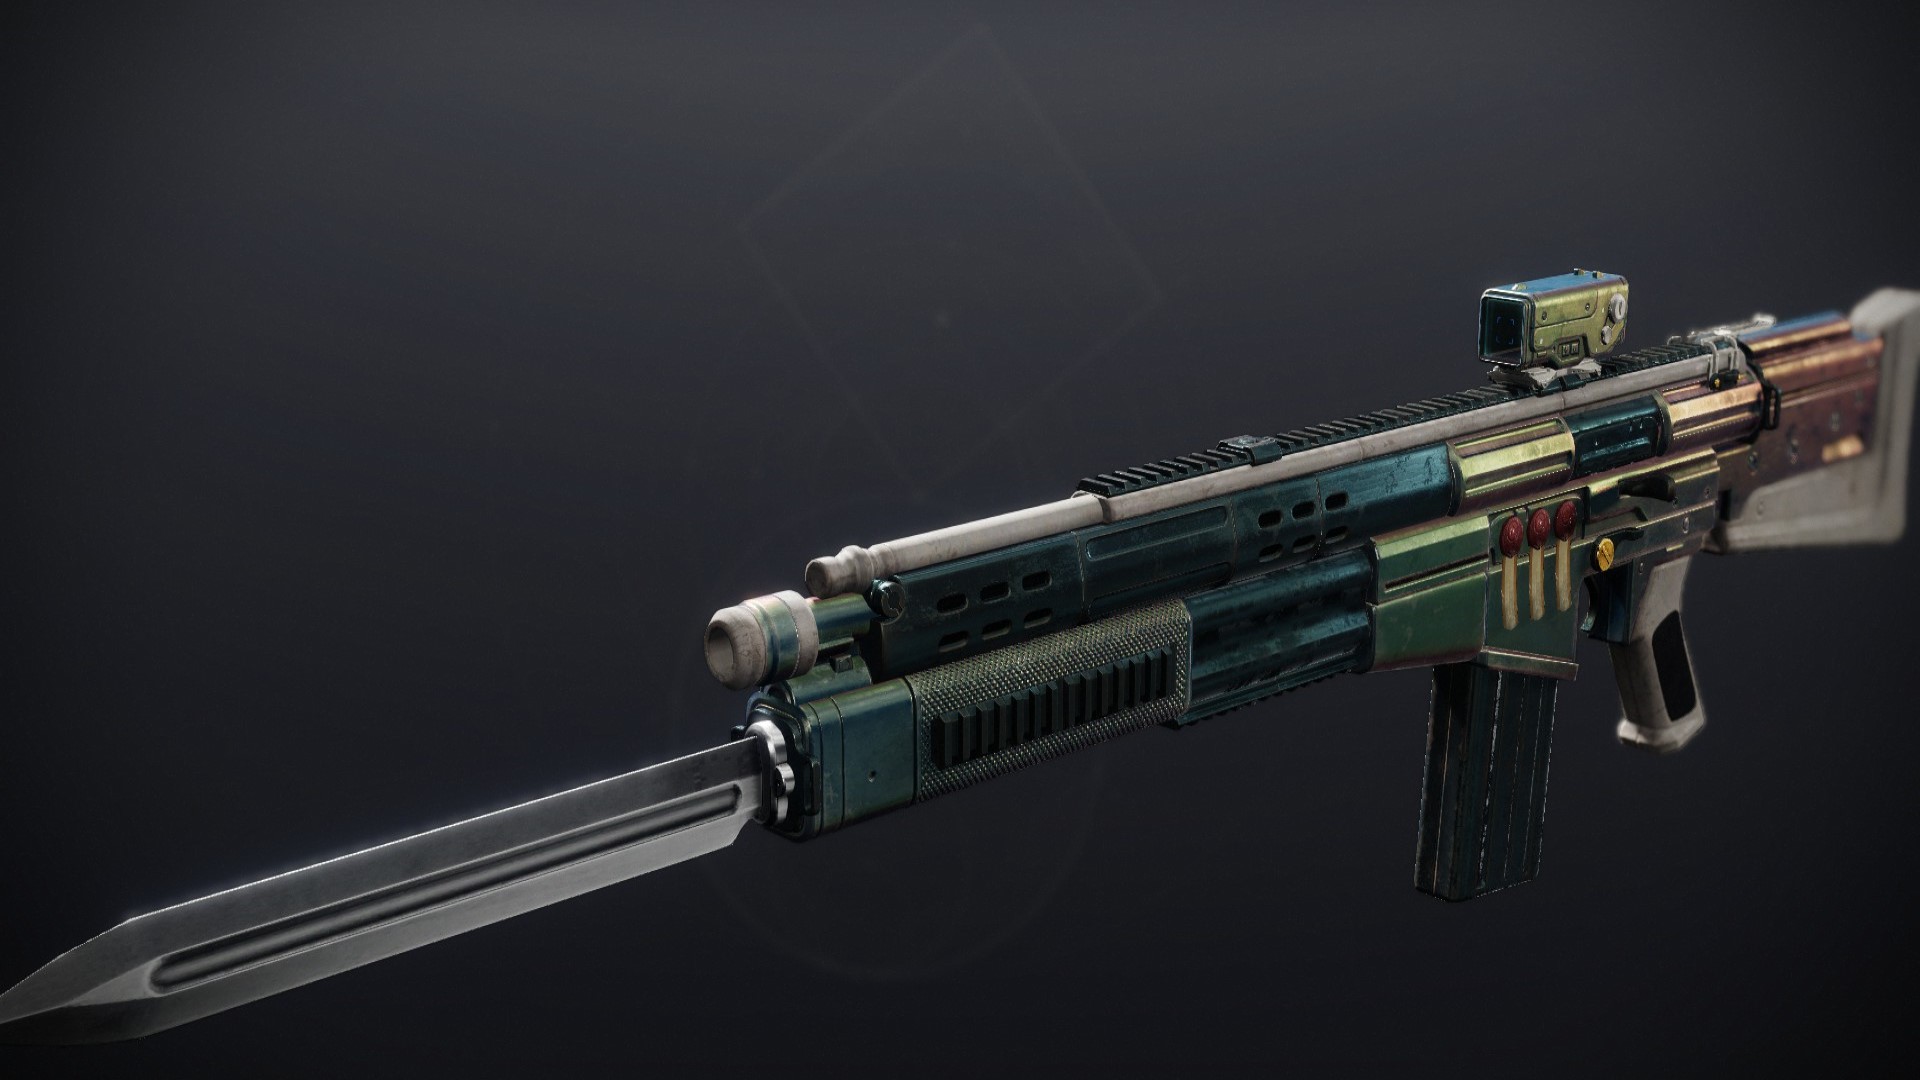 Destiny 2 nightfall weapon this week - Duty Bound